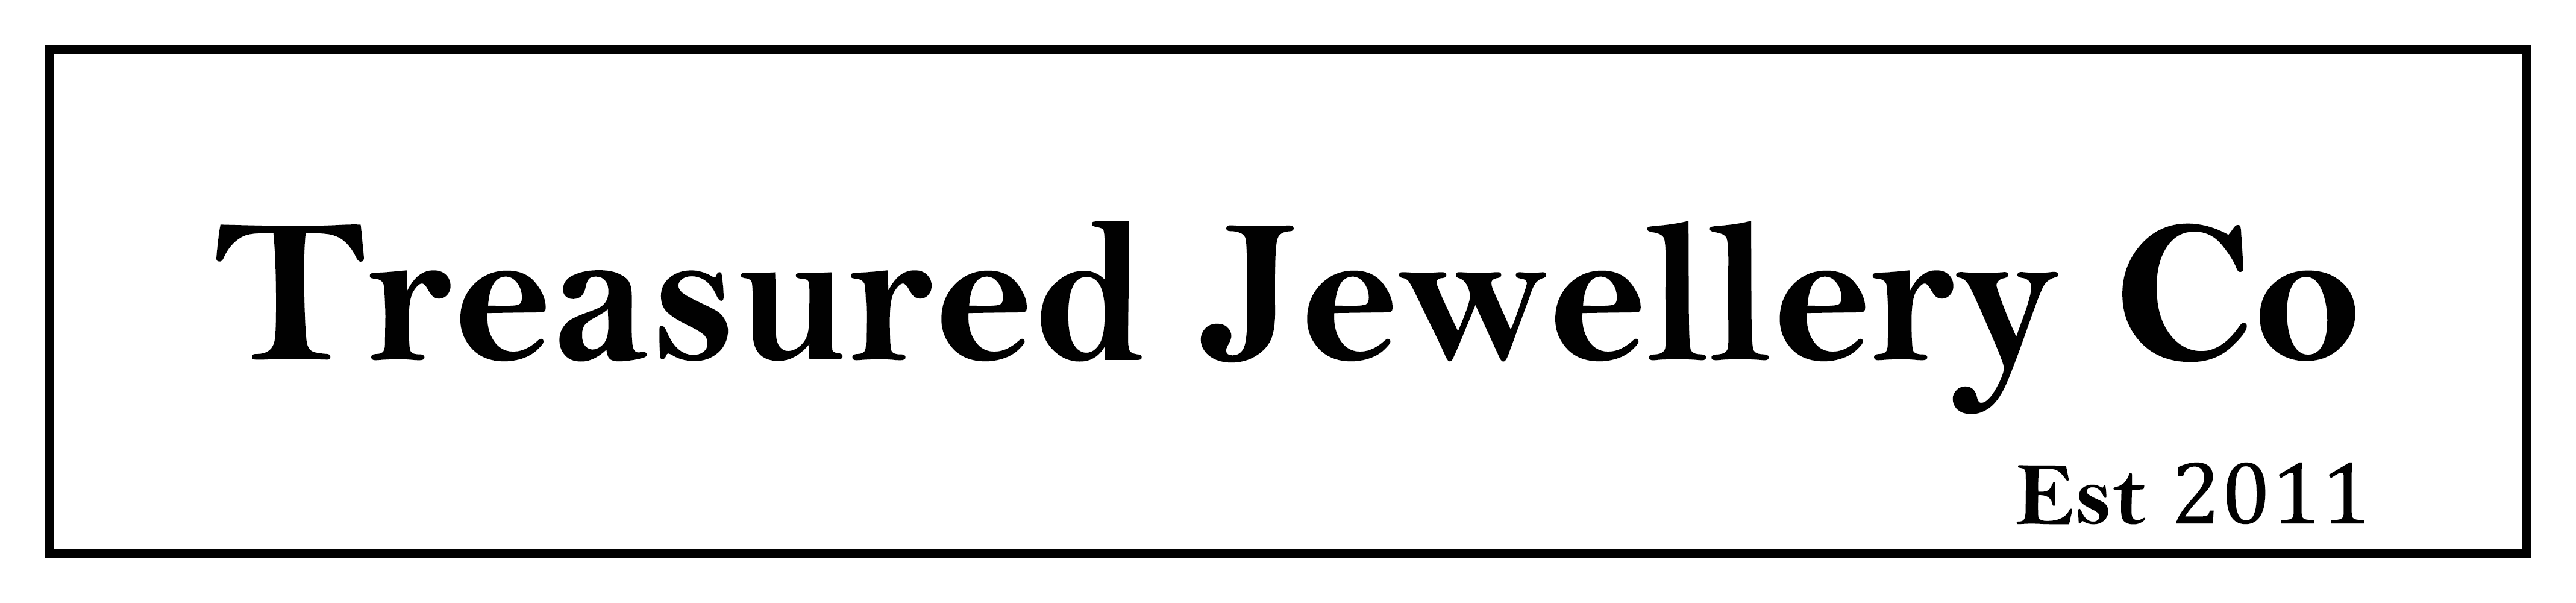 The Treasured Jewellery Co